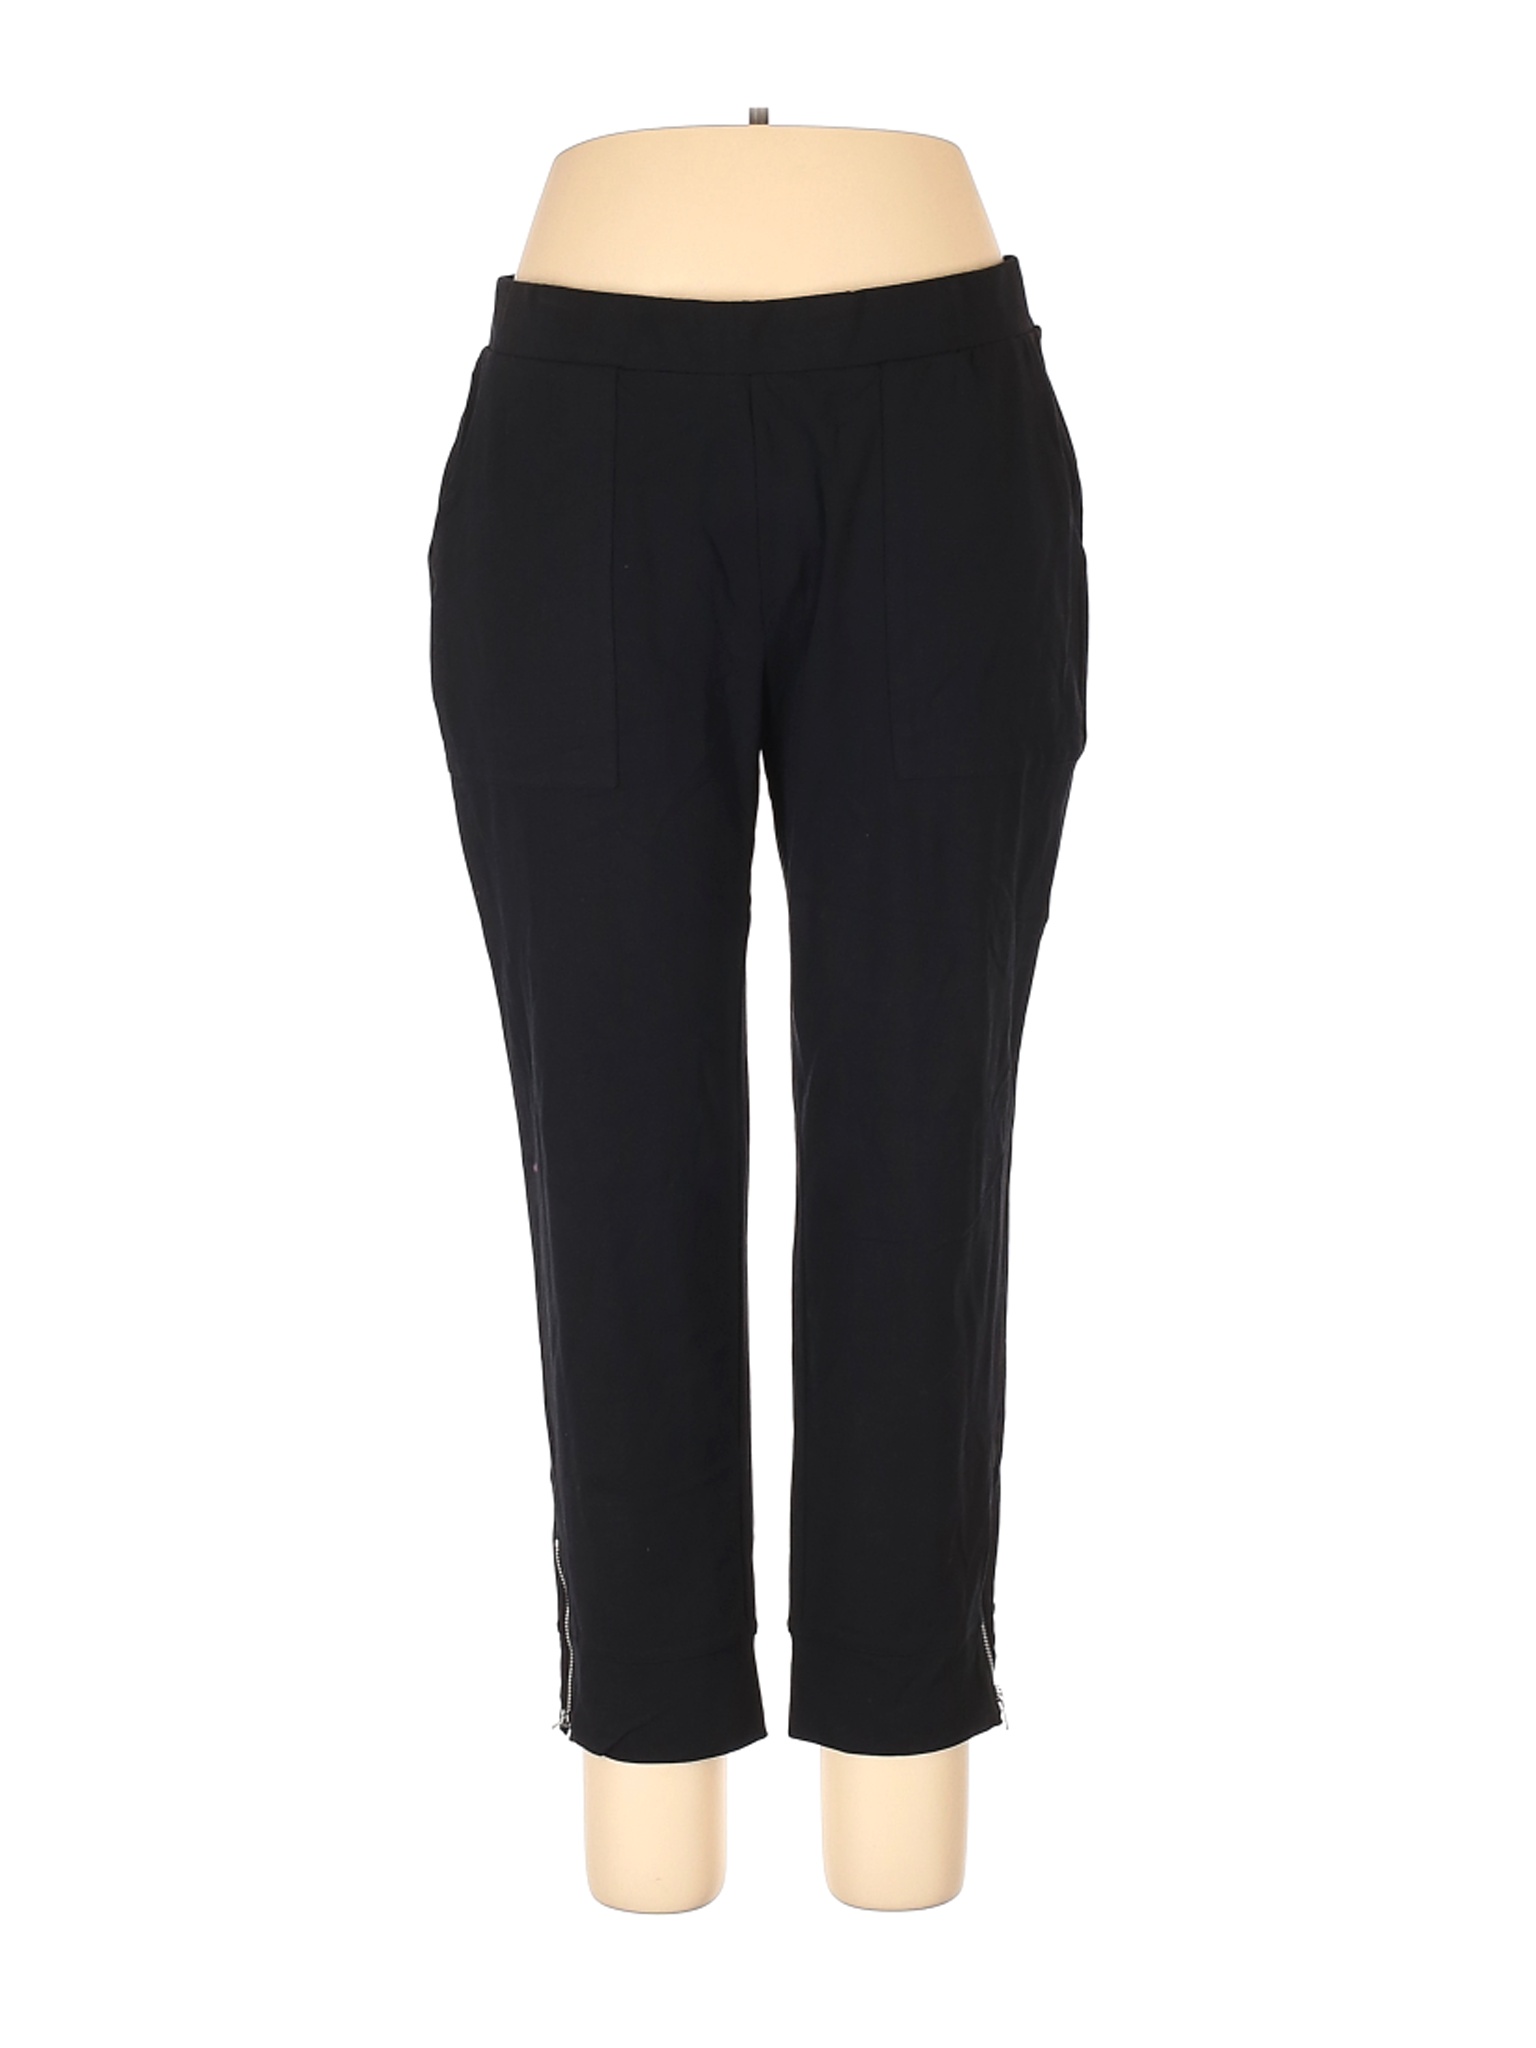 Susan Graver Women Black Casual Pants L Petites | eBay